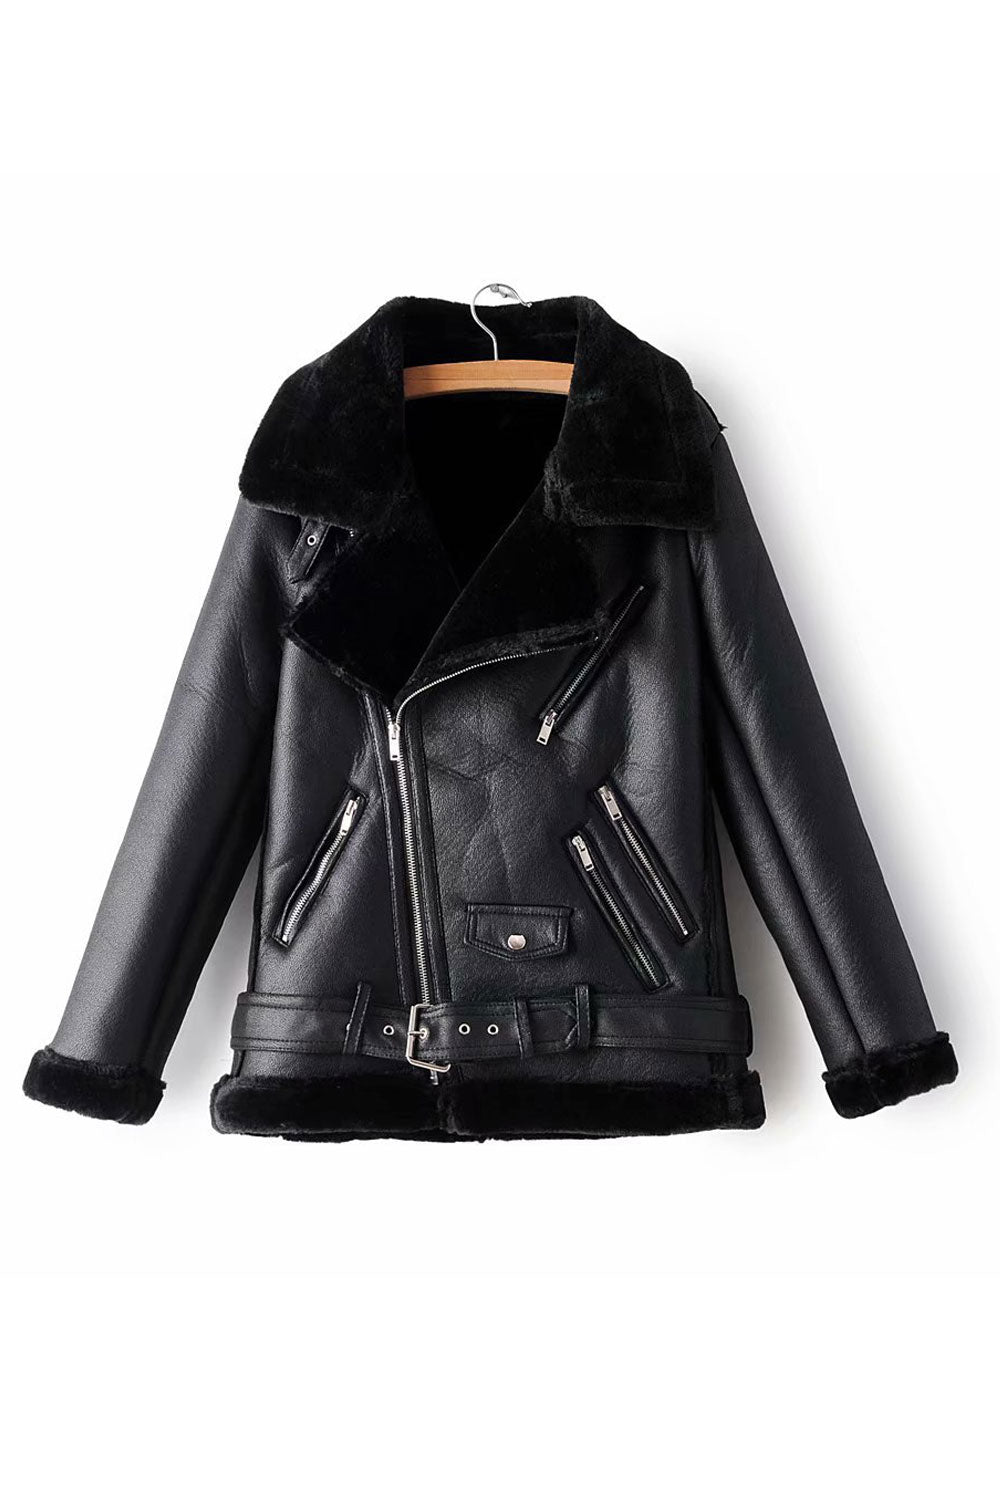 Women Oblique Zipper Style Thick Long Sleeve Winter Leather Jacket   WJC23228